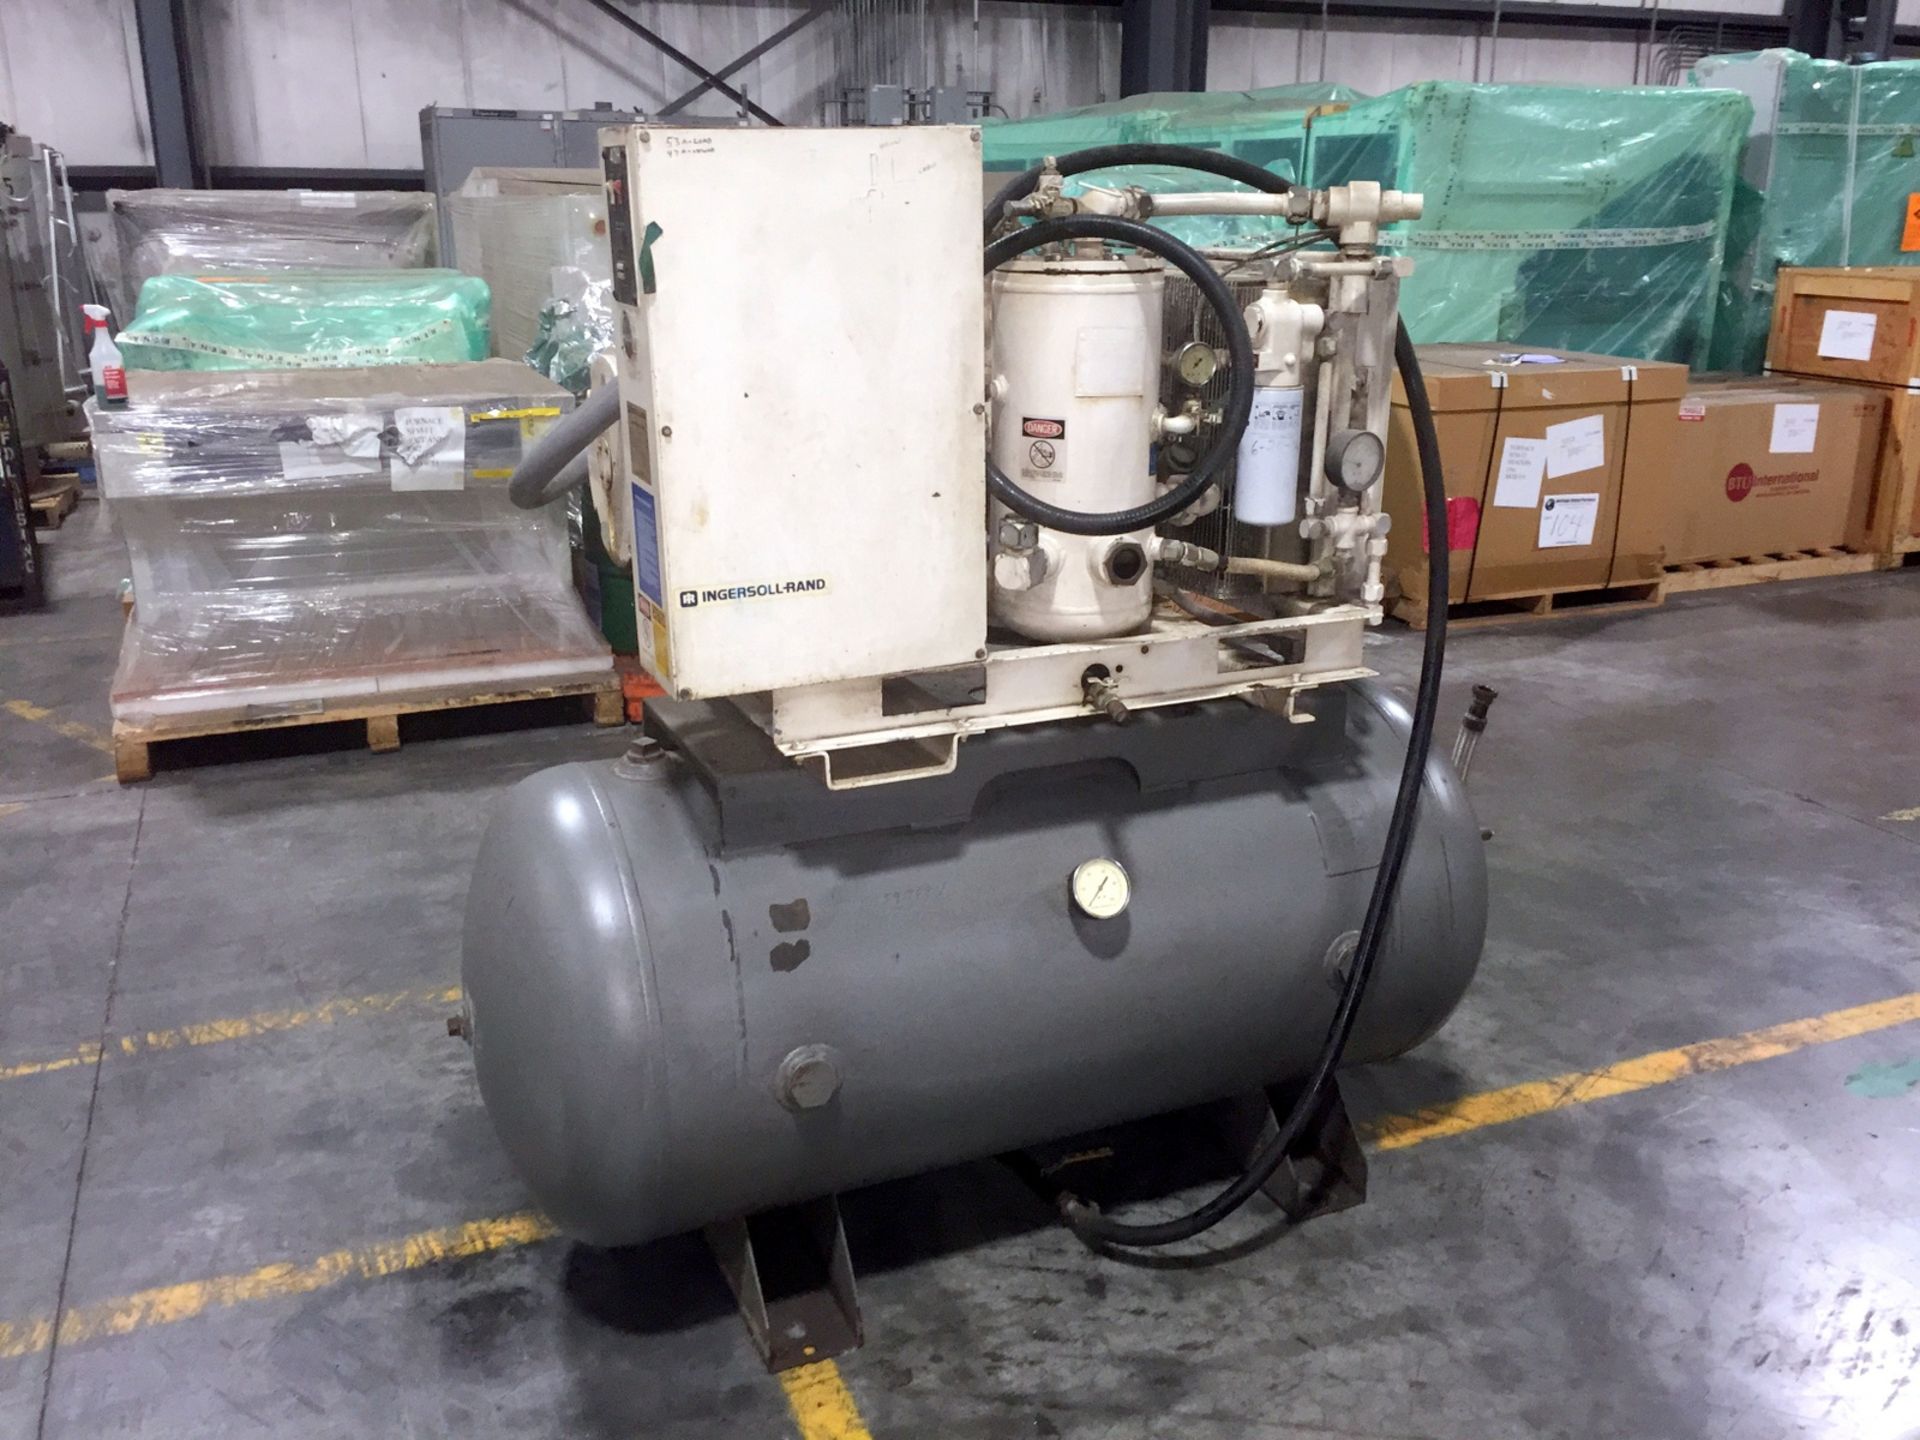 Ingersoll Rand Mdl. 40H-SP Rotary Screw Compressor, Capacity 153 ACFM, Maximum Discharge Pressure